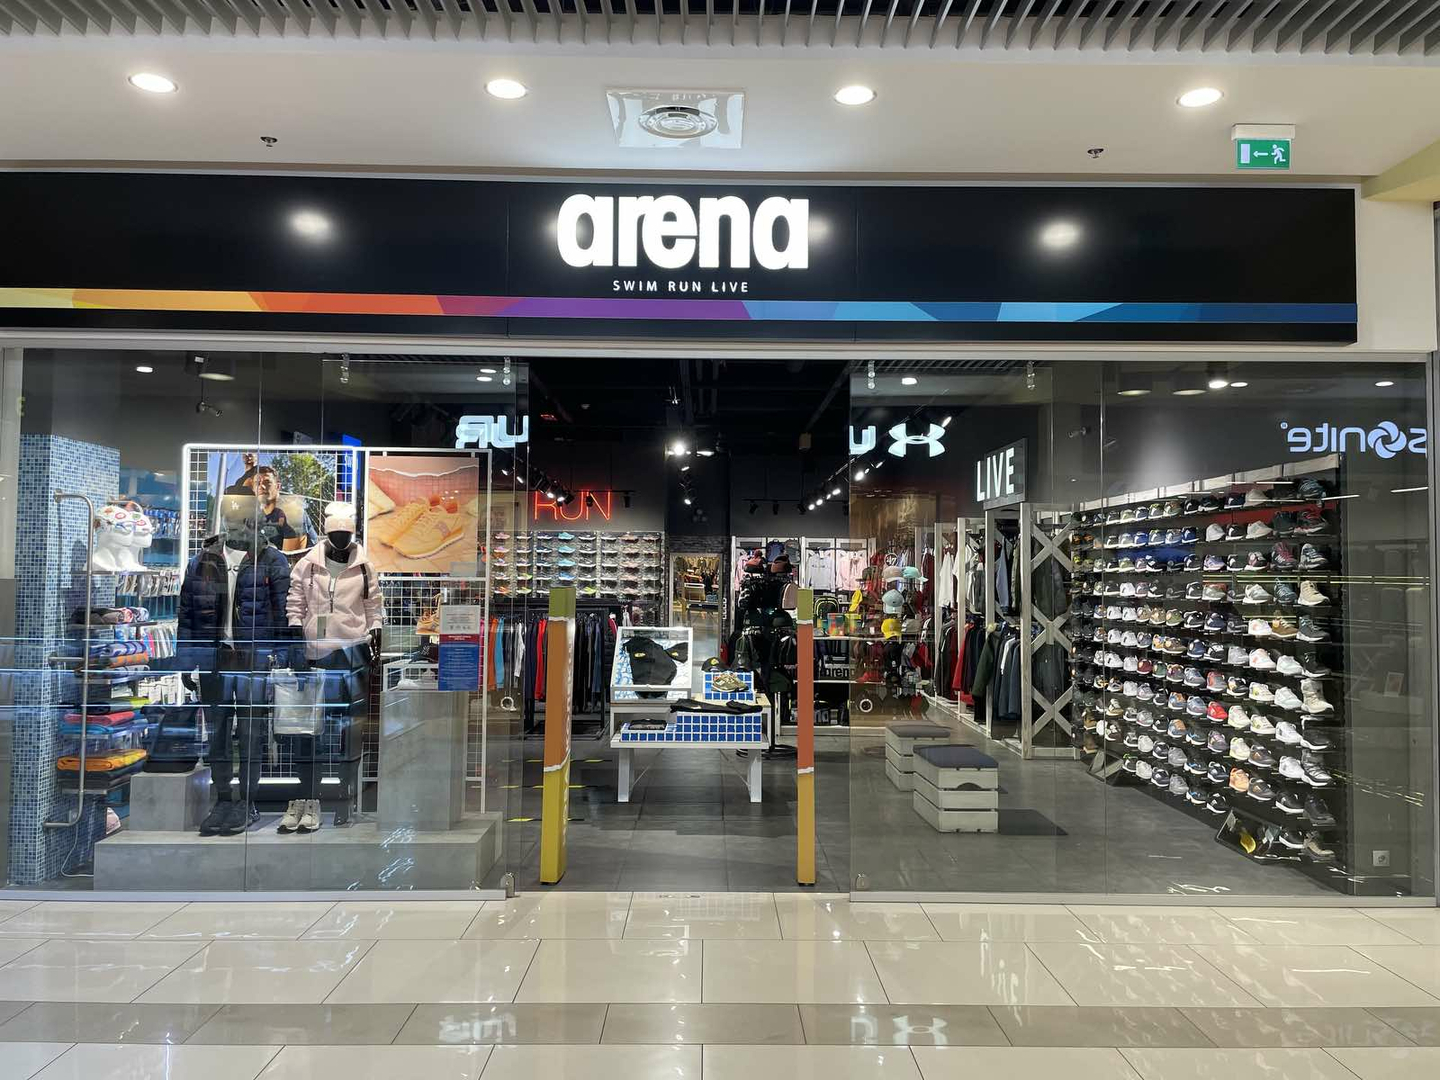 Arena Store